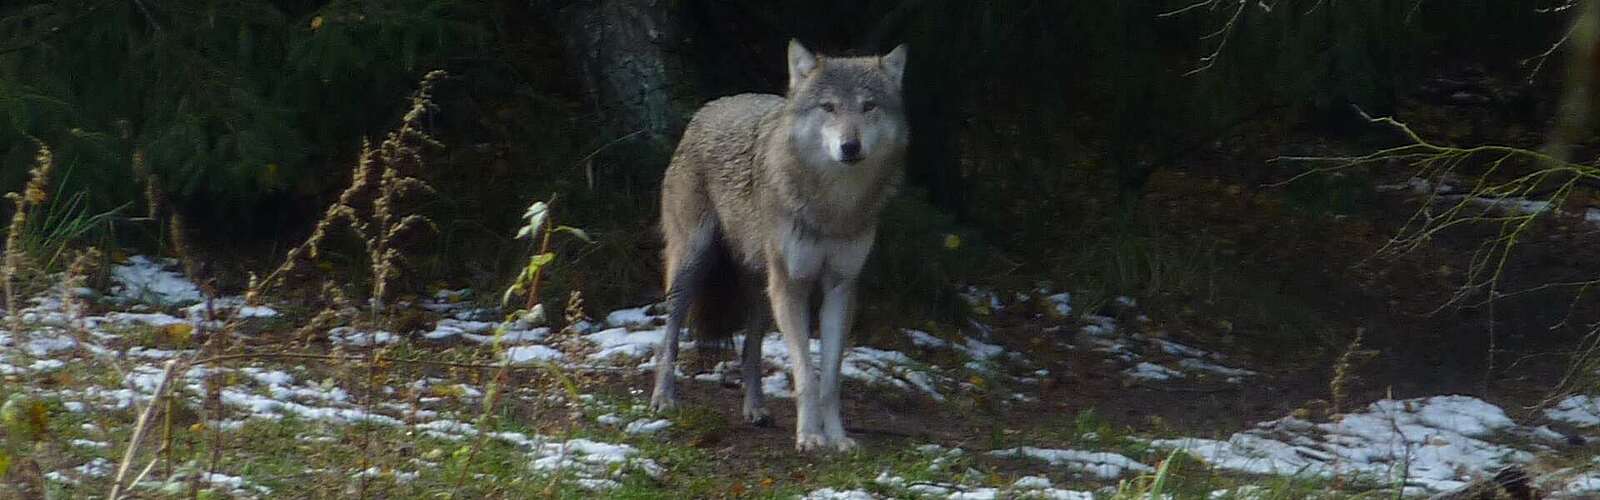 Wolf im Gehege,
        
    

        Foto: TMB-Fotoarchiv/Ronald Keusch